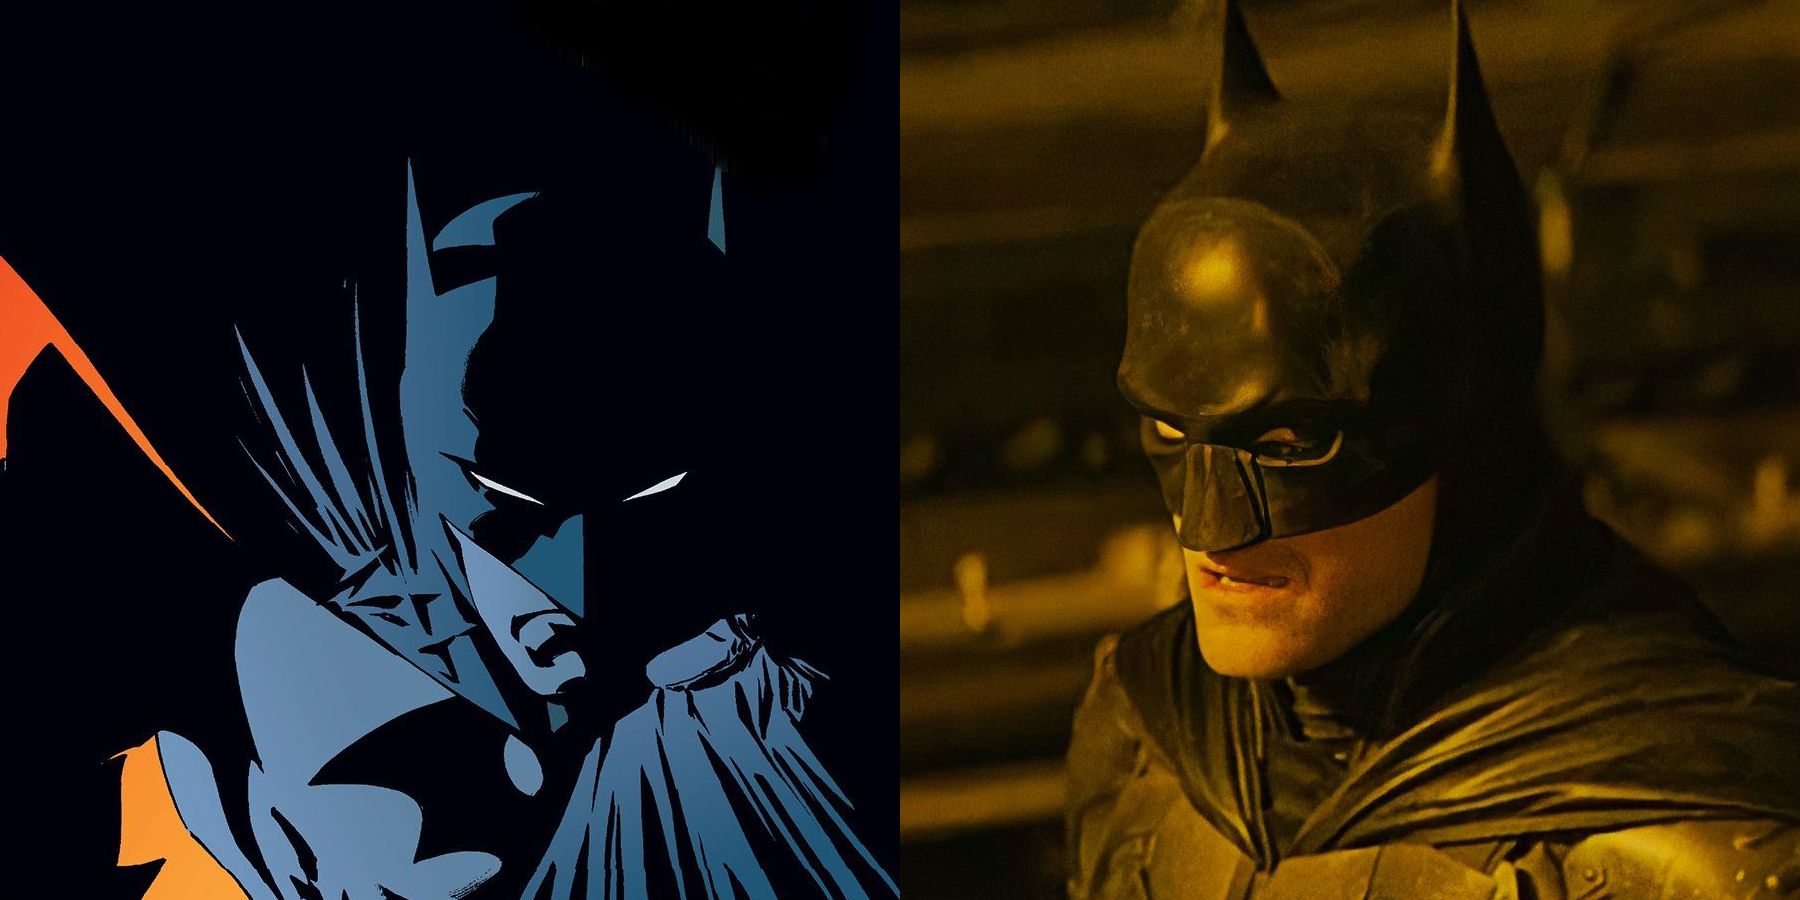 Robert Pattinson Reveals Comics That Inspired His Take On The Batman